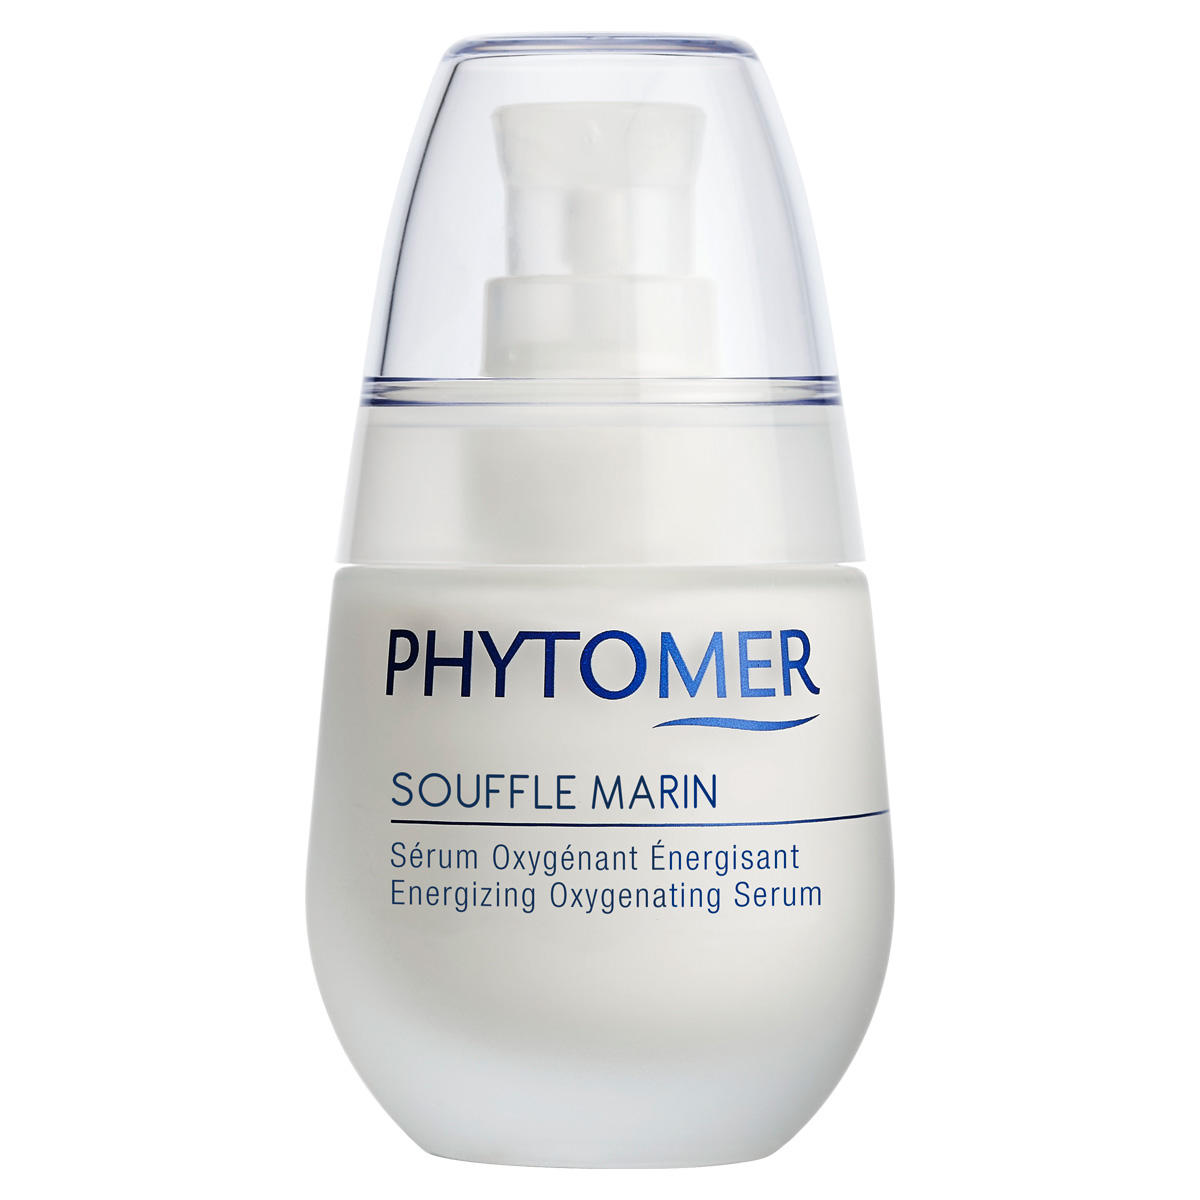 PHYTOMER SOUFFLE MARIN Sérum Oxygénant Énergisant 30 ml - 1